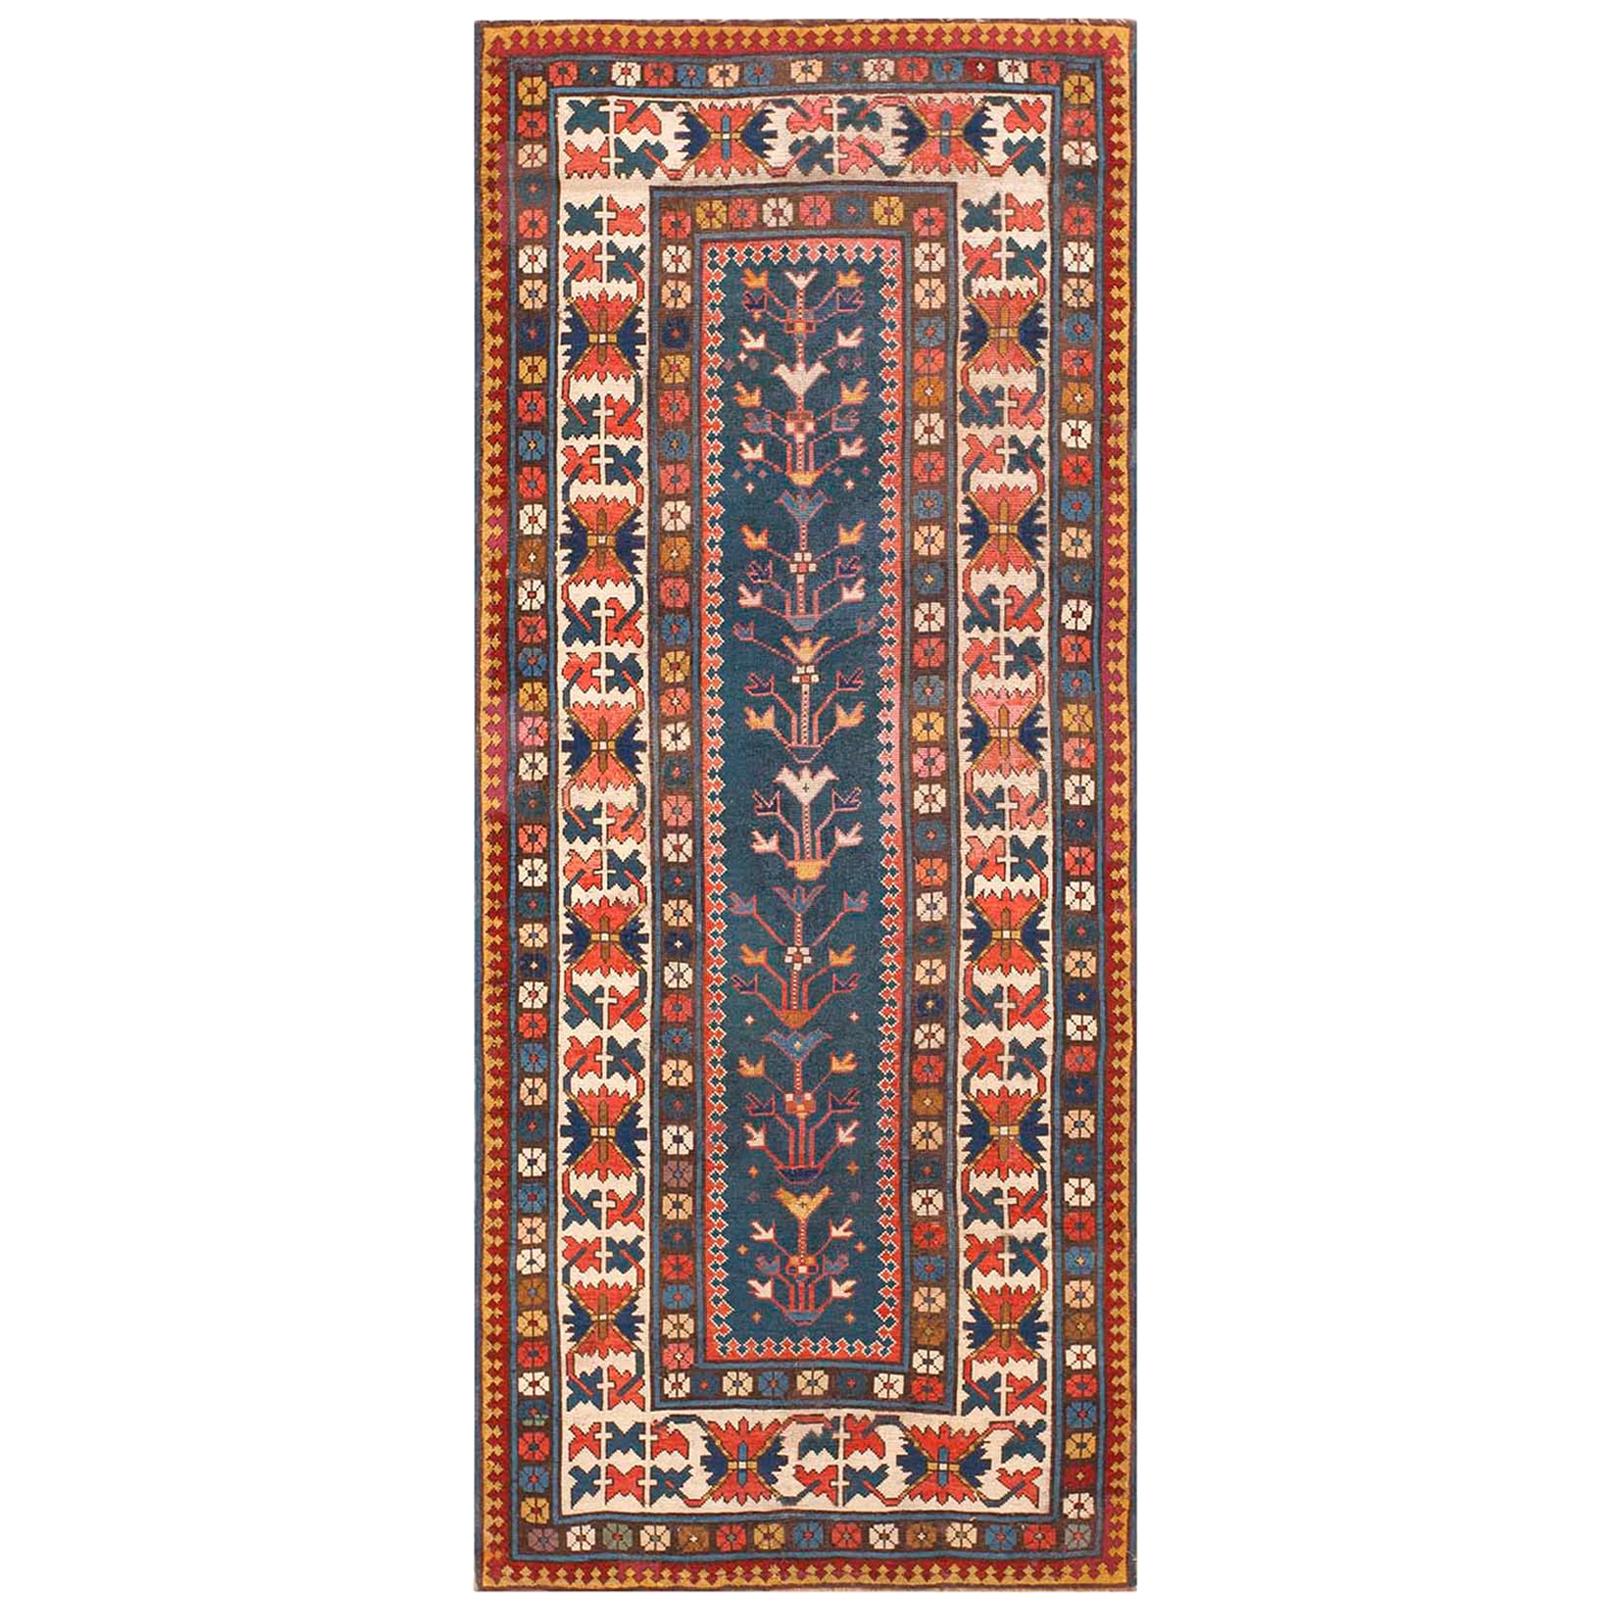 19th Century Caucasian Kazak Tree of Life Carpet ( 3'7" x 8'2" - 109 x 249 )